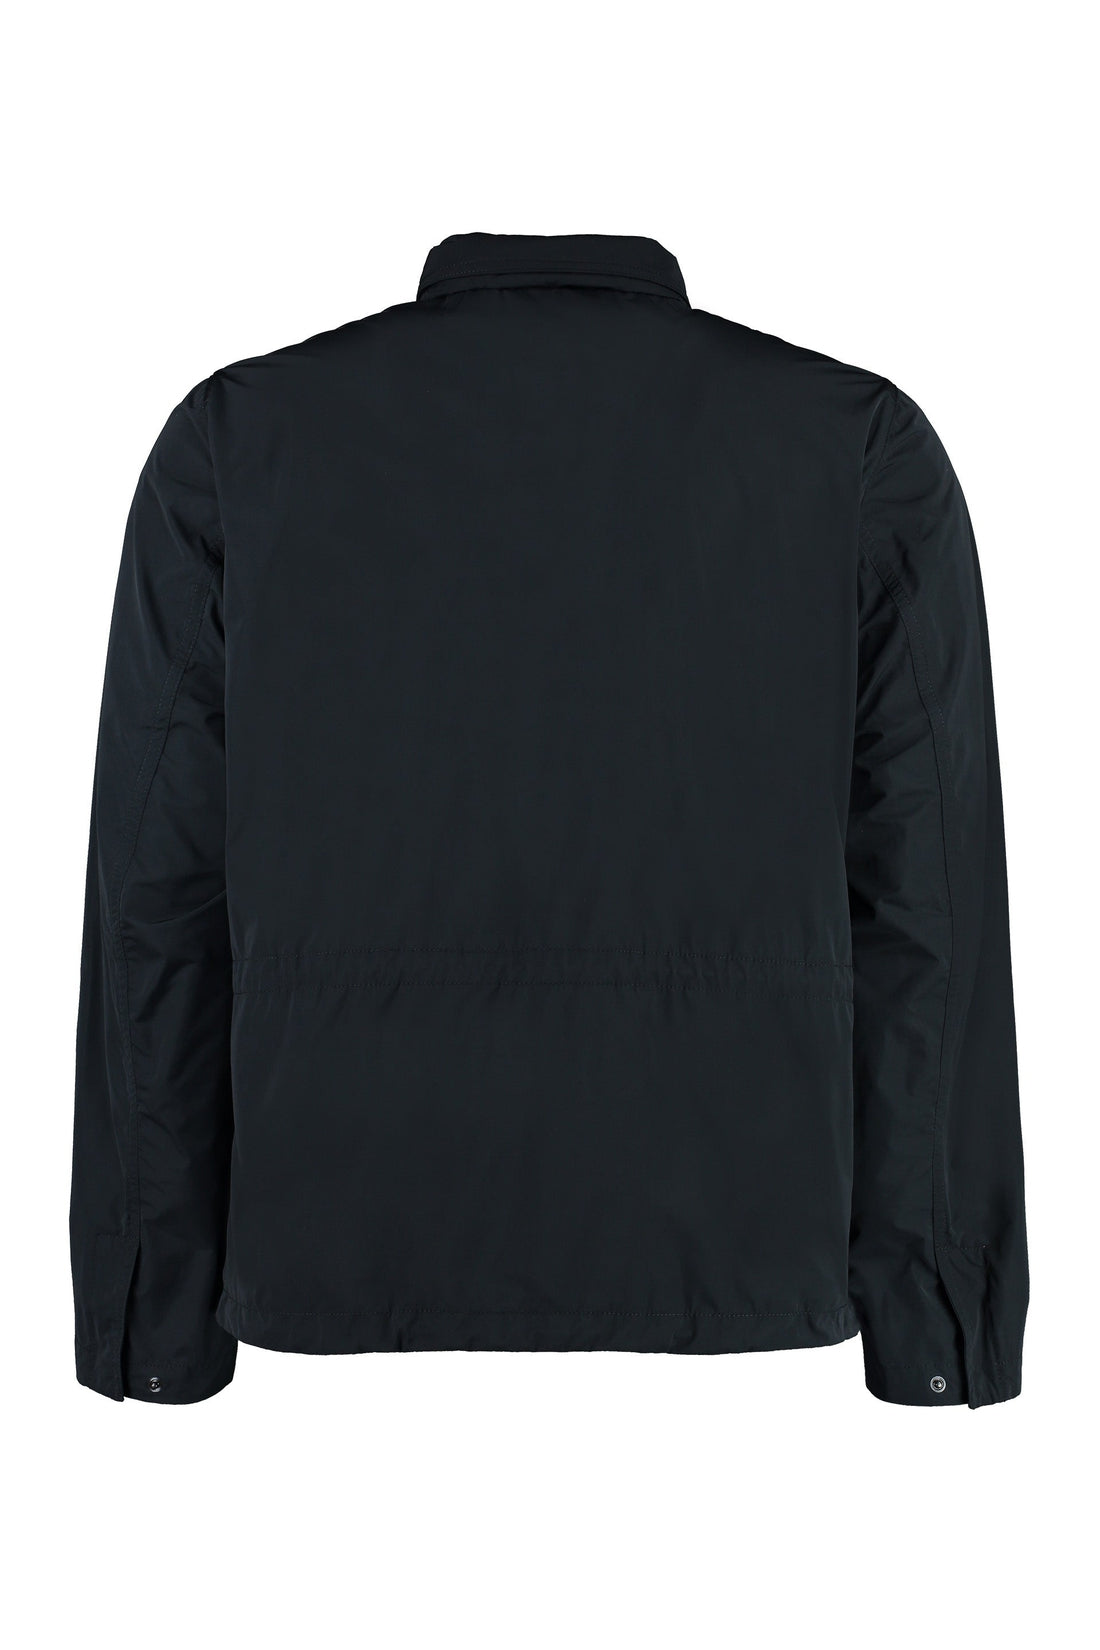 Aspesi-OUTLET-SALE-Stringa Nylon jacket-ARCHIVIST